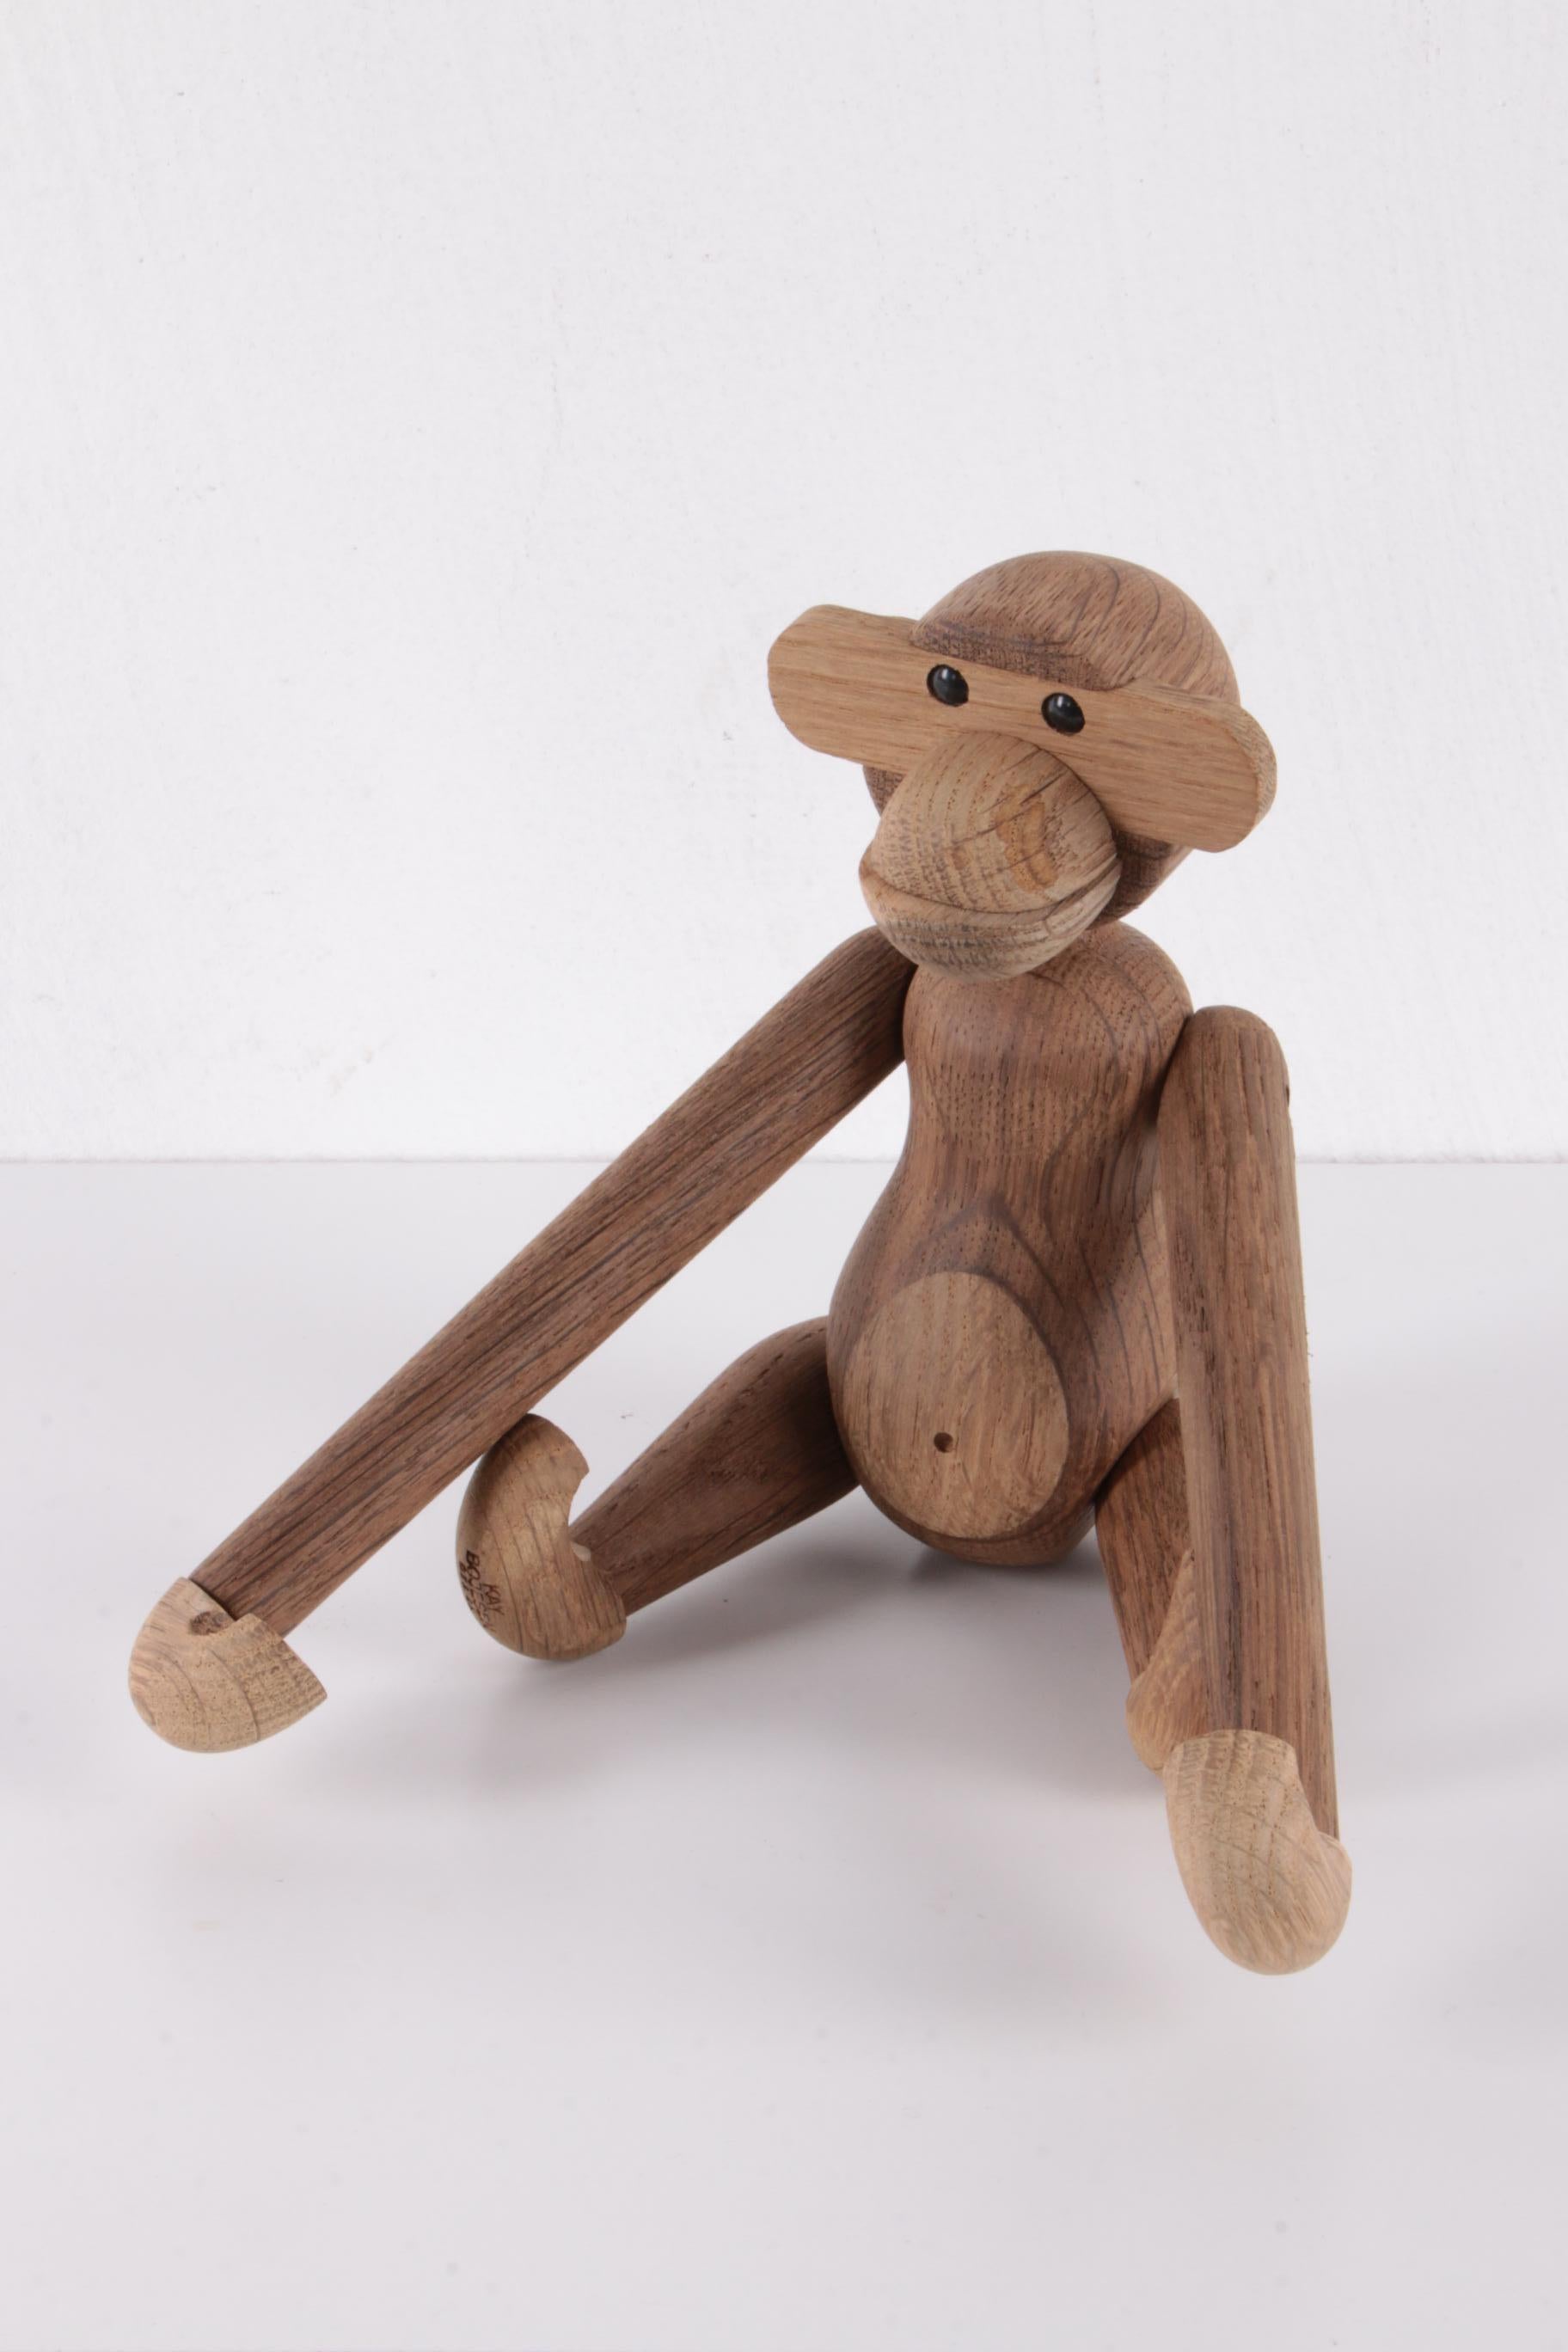 Danish Original Kay Bojesen Monkey Monkey Size Small